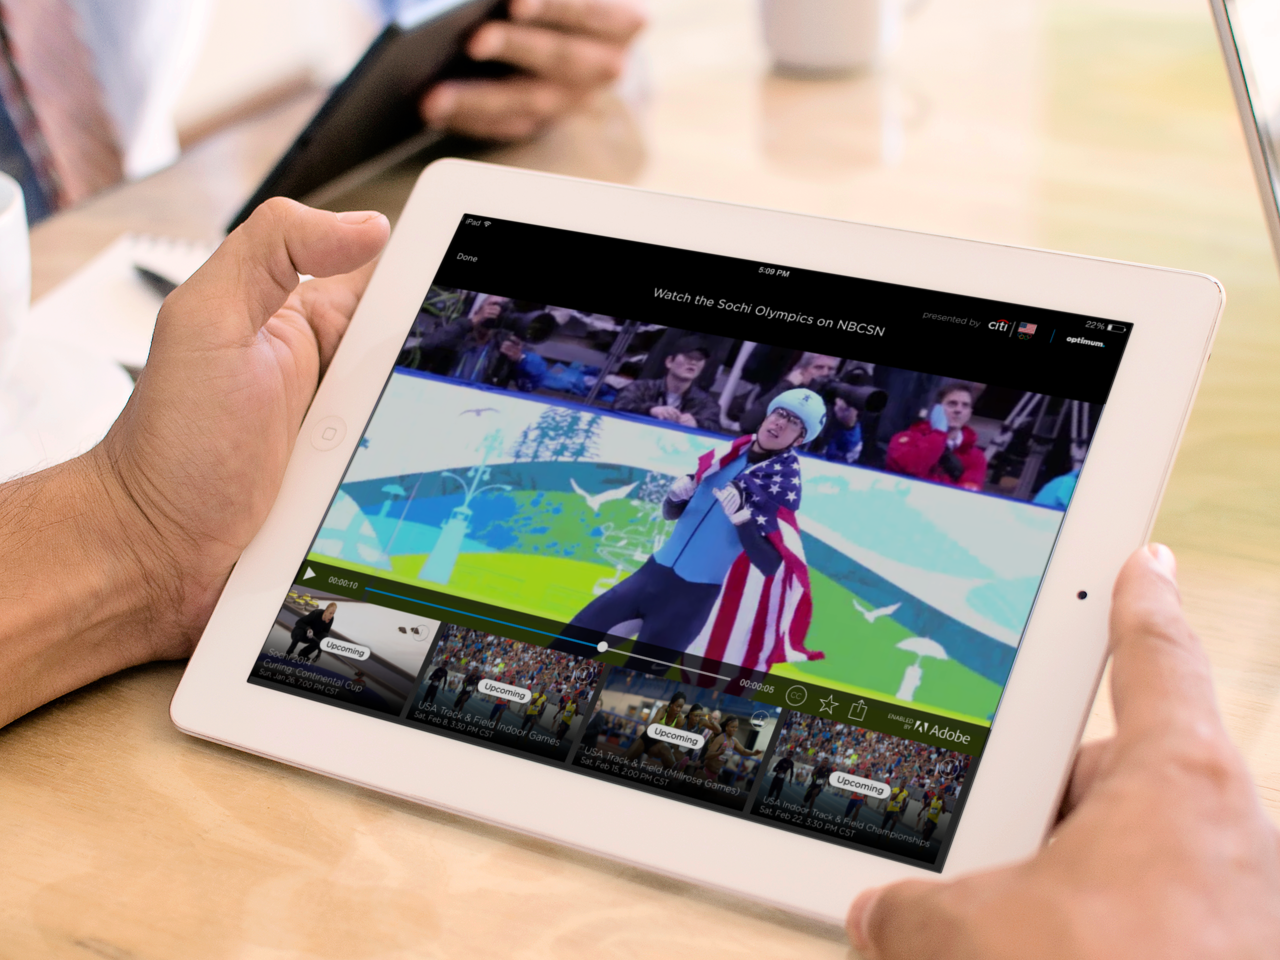 Adobe Sochi Olympics App Image v1